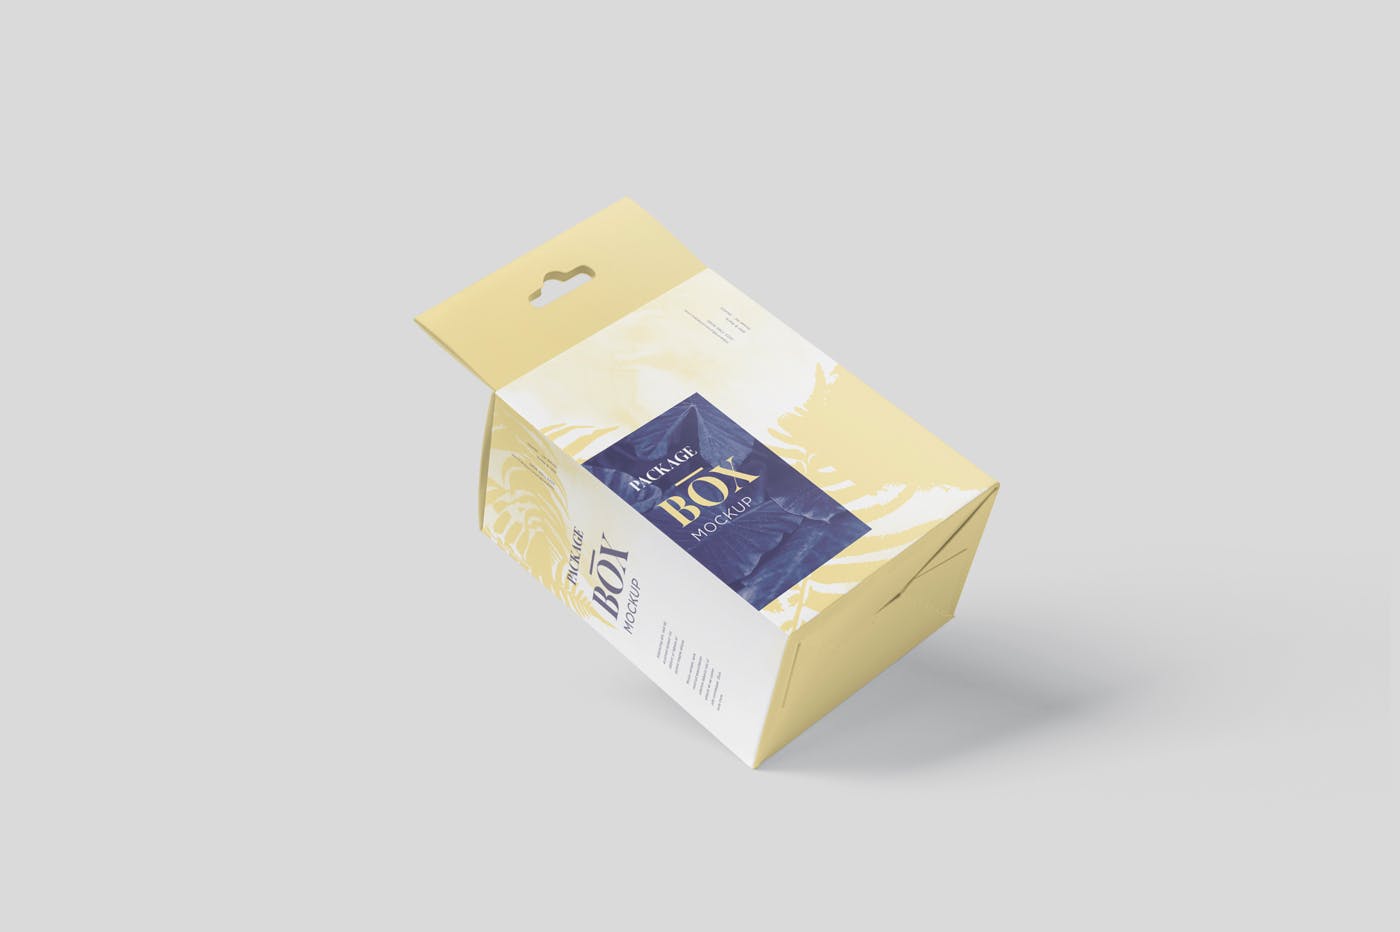 挂耳式扁平矩形包装盒蚂蚁素材精选模板 Package Box Mockup Set – Slim Square with Hanger插图(3)